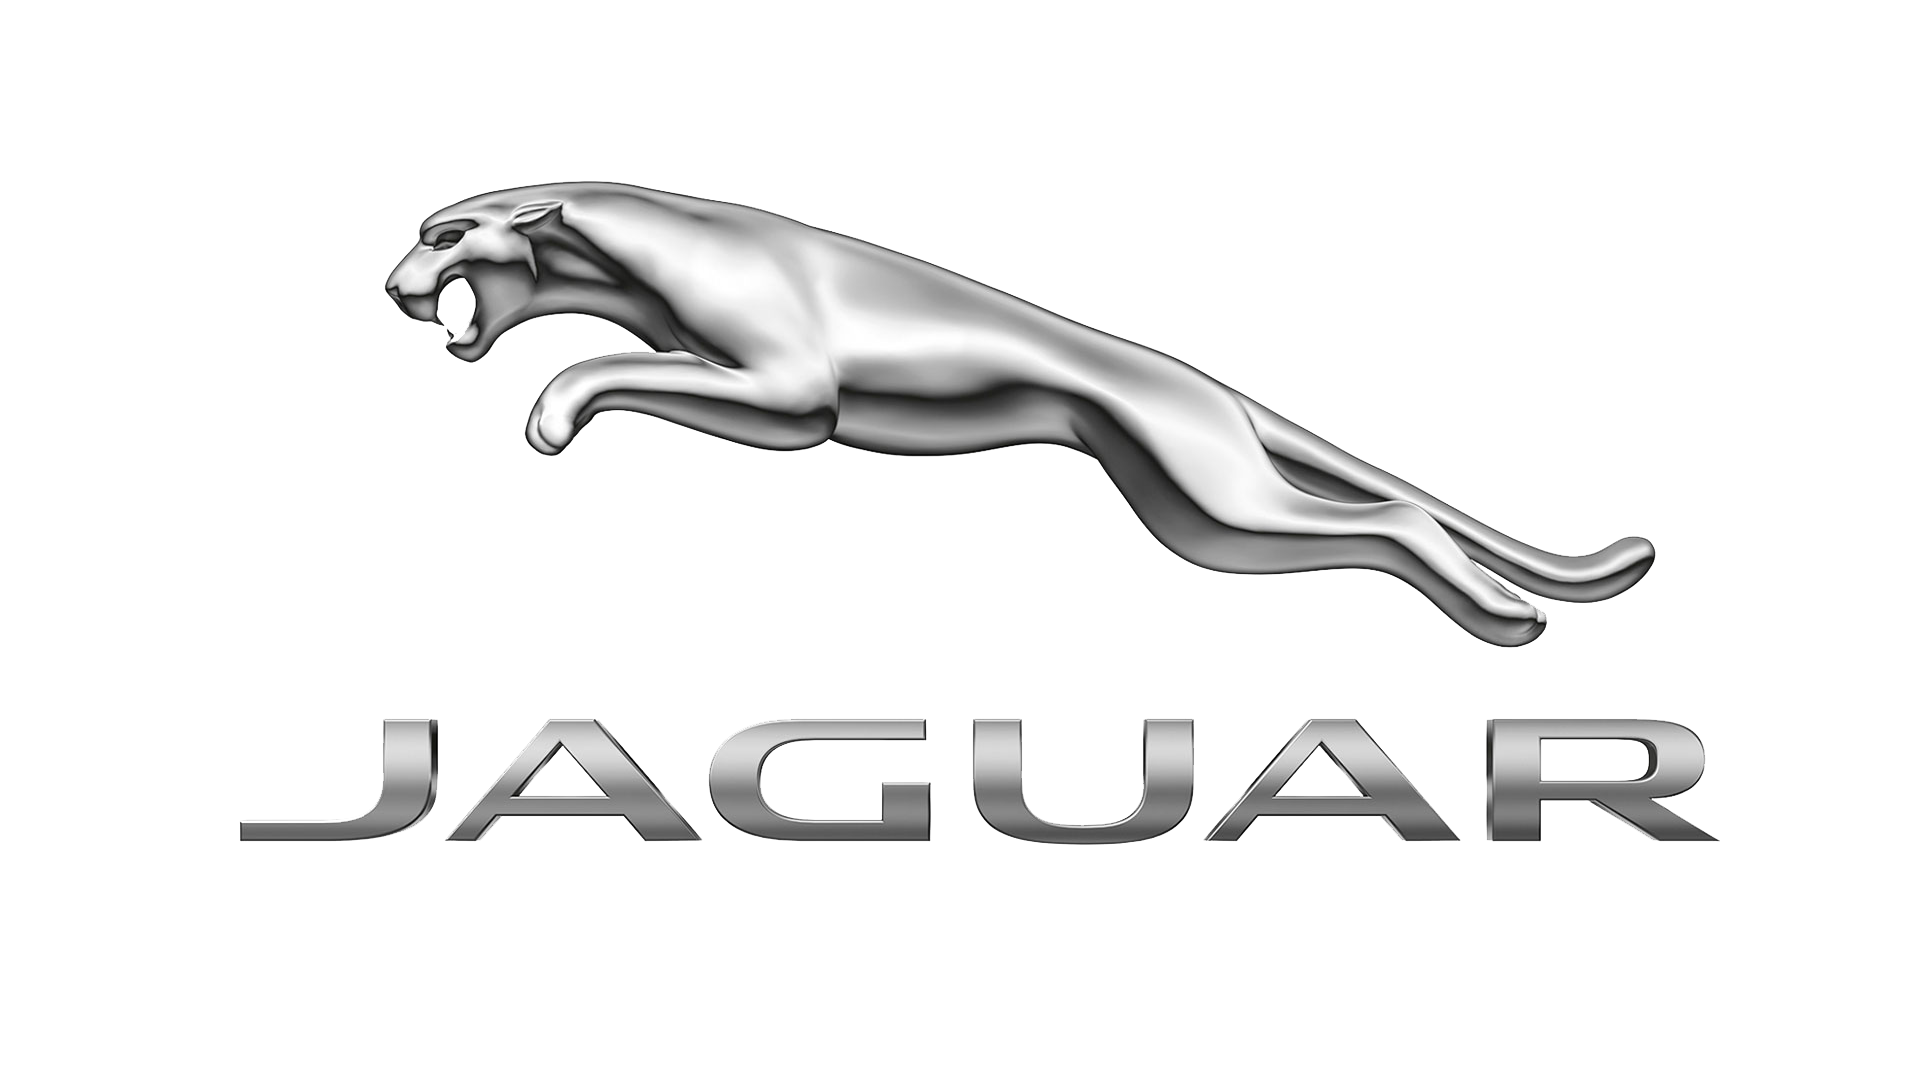 Free jaguar clipart 1 page of